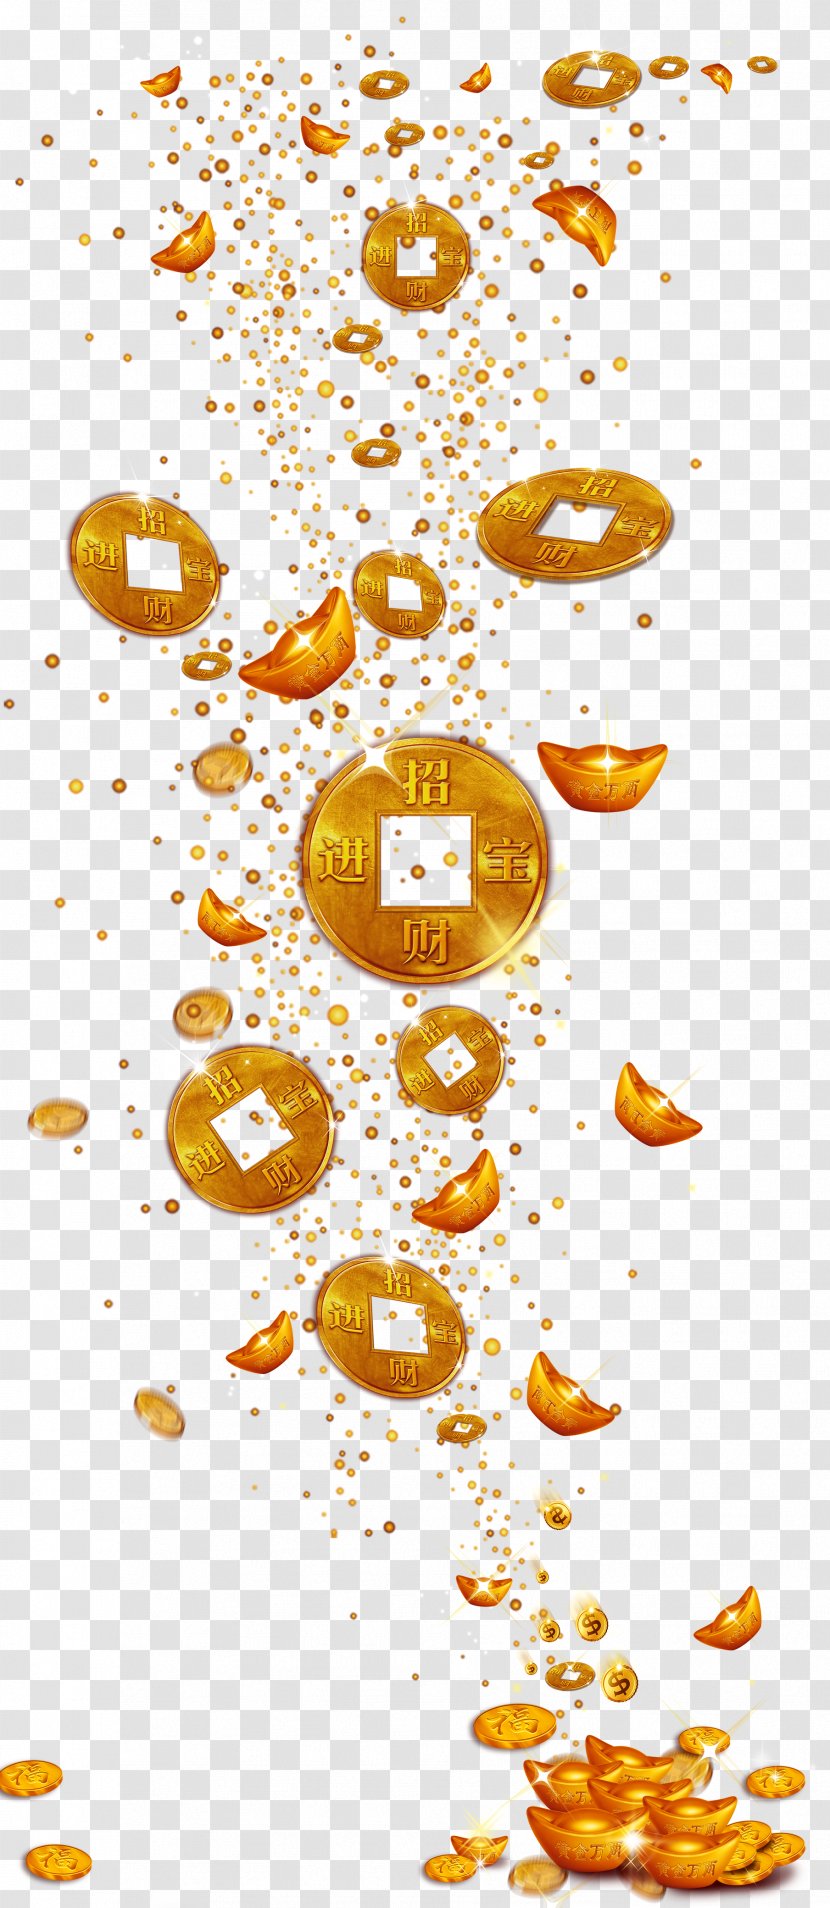 Gold Coin - Golden Atmosphere Falling Money Ingot Material Transparent PNG